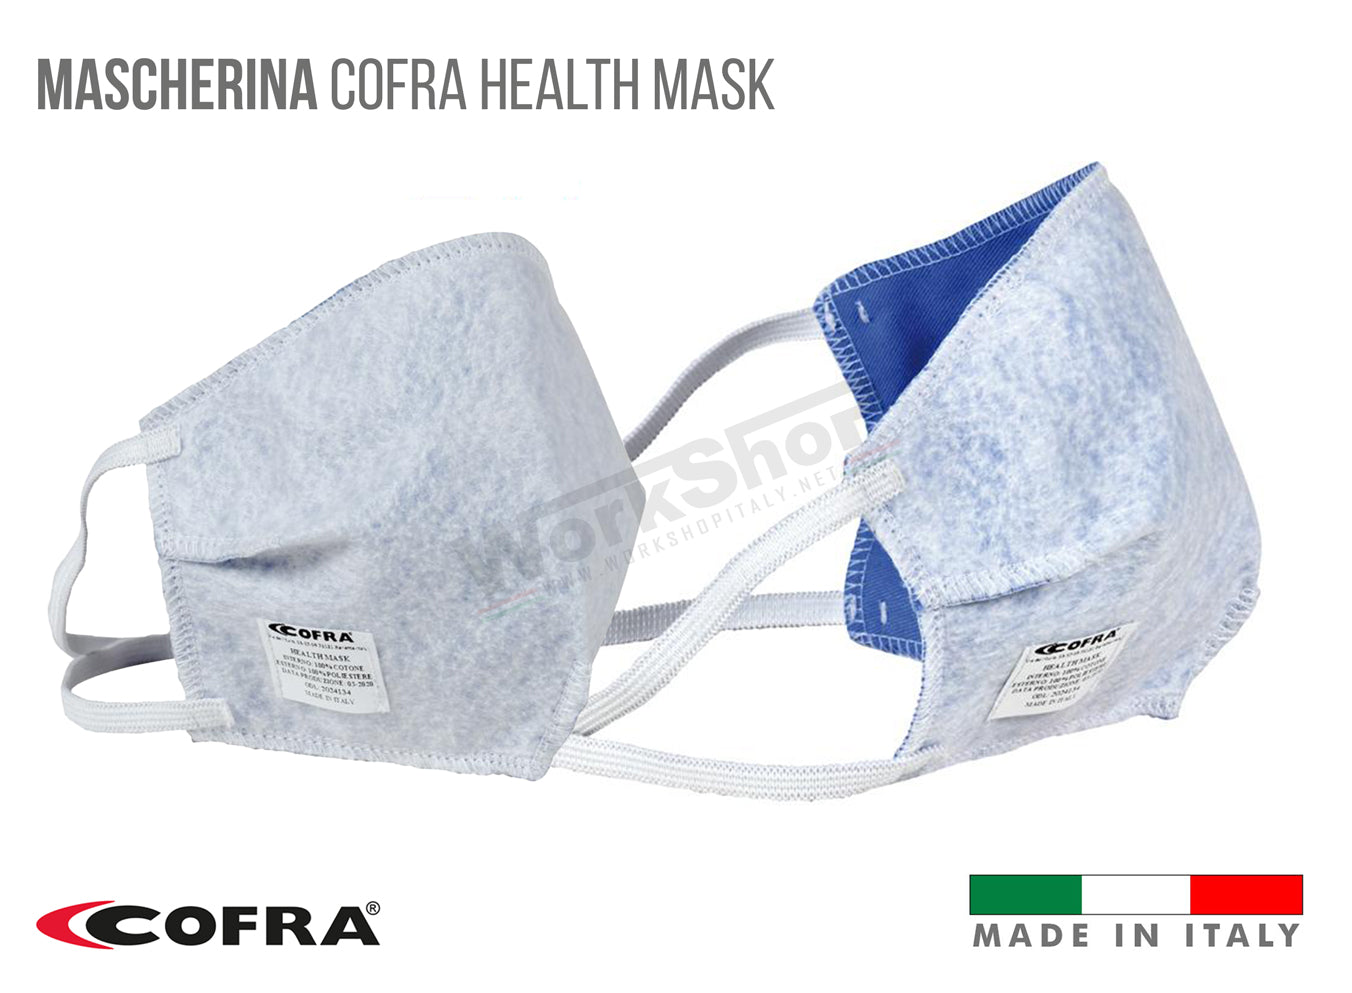 Mascherina Cofra M031 HEALTH MASK conf. 25pz.